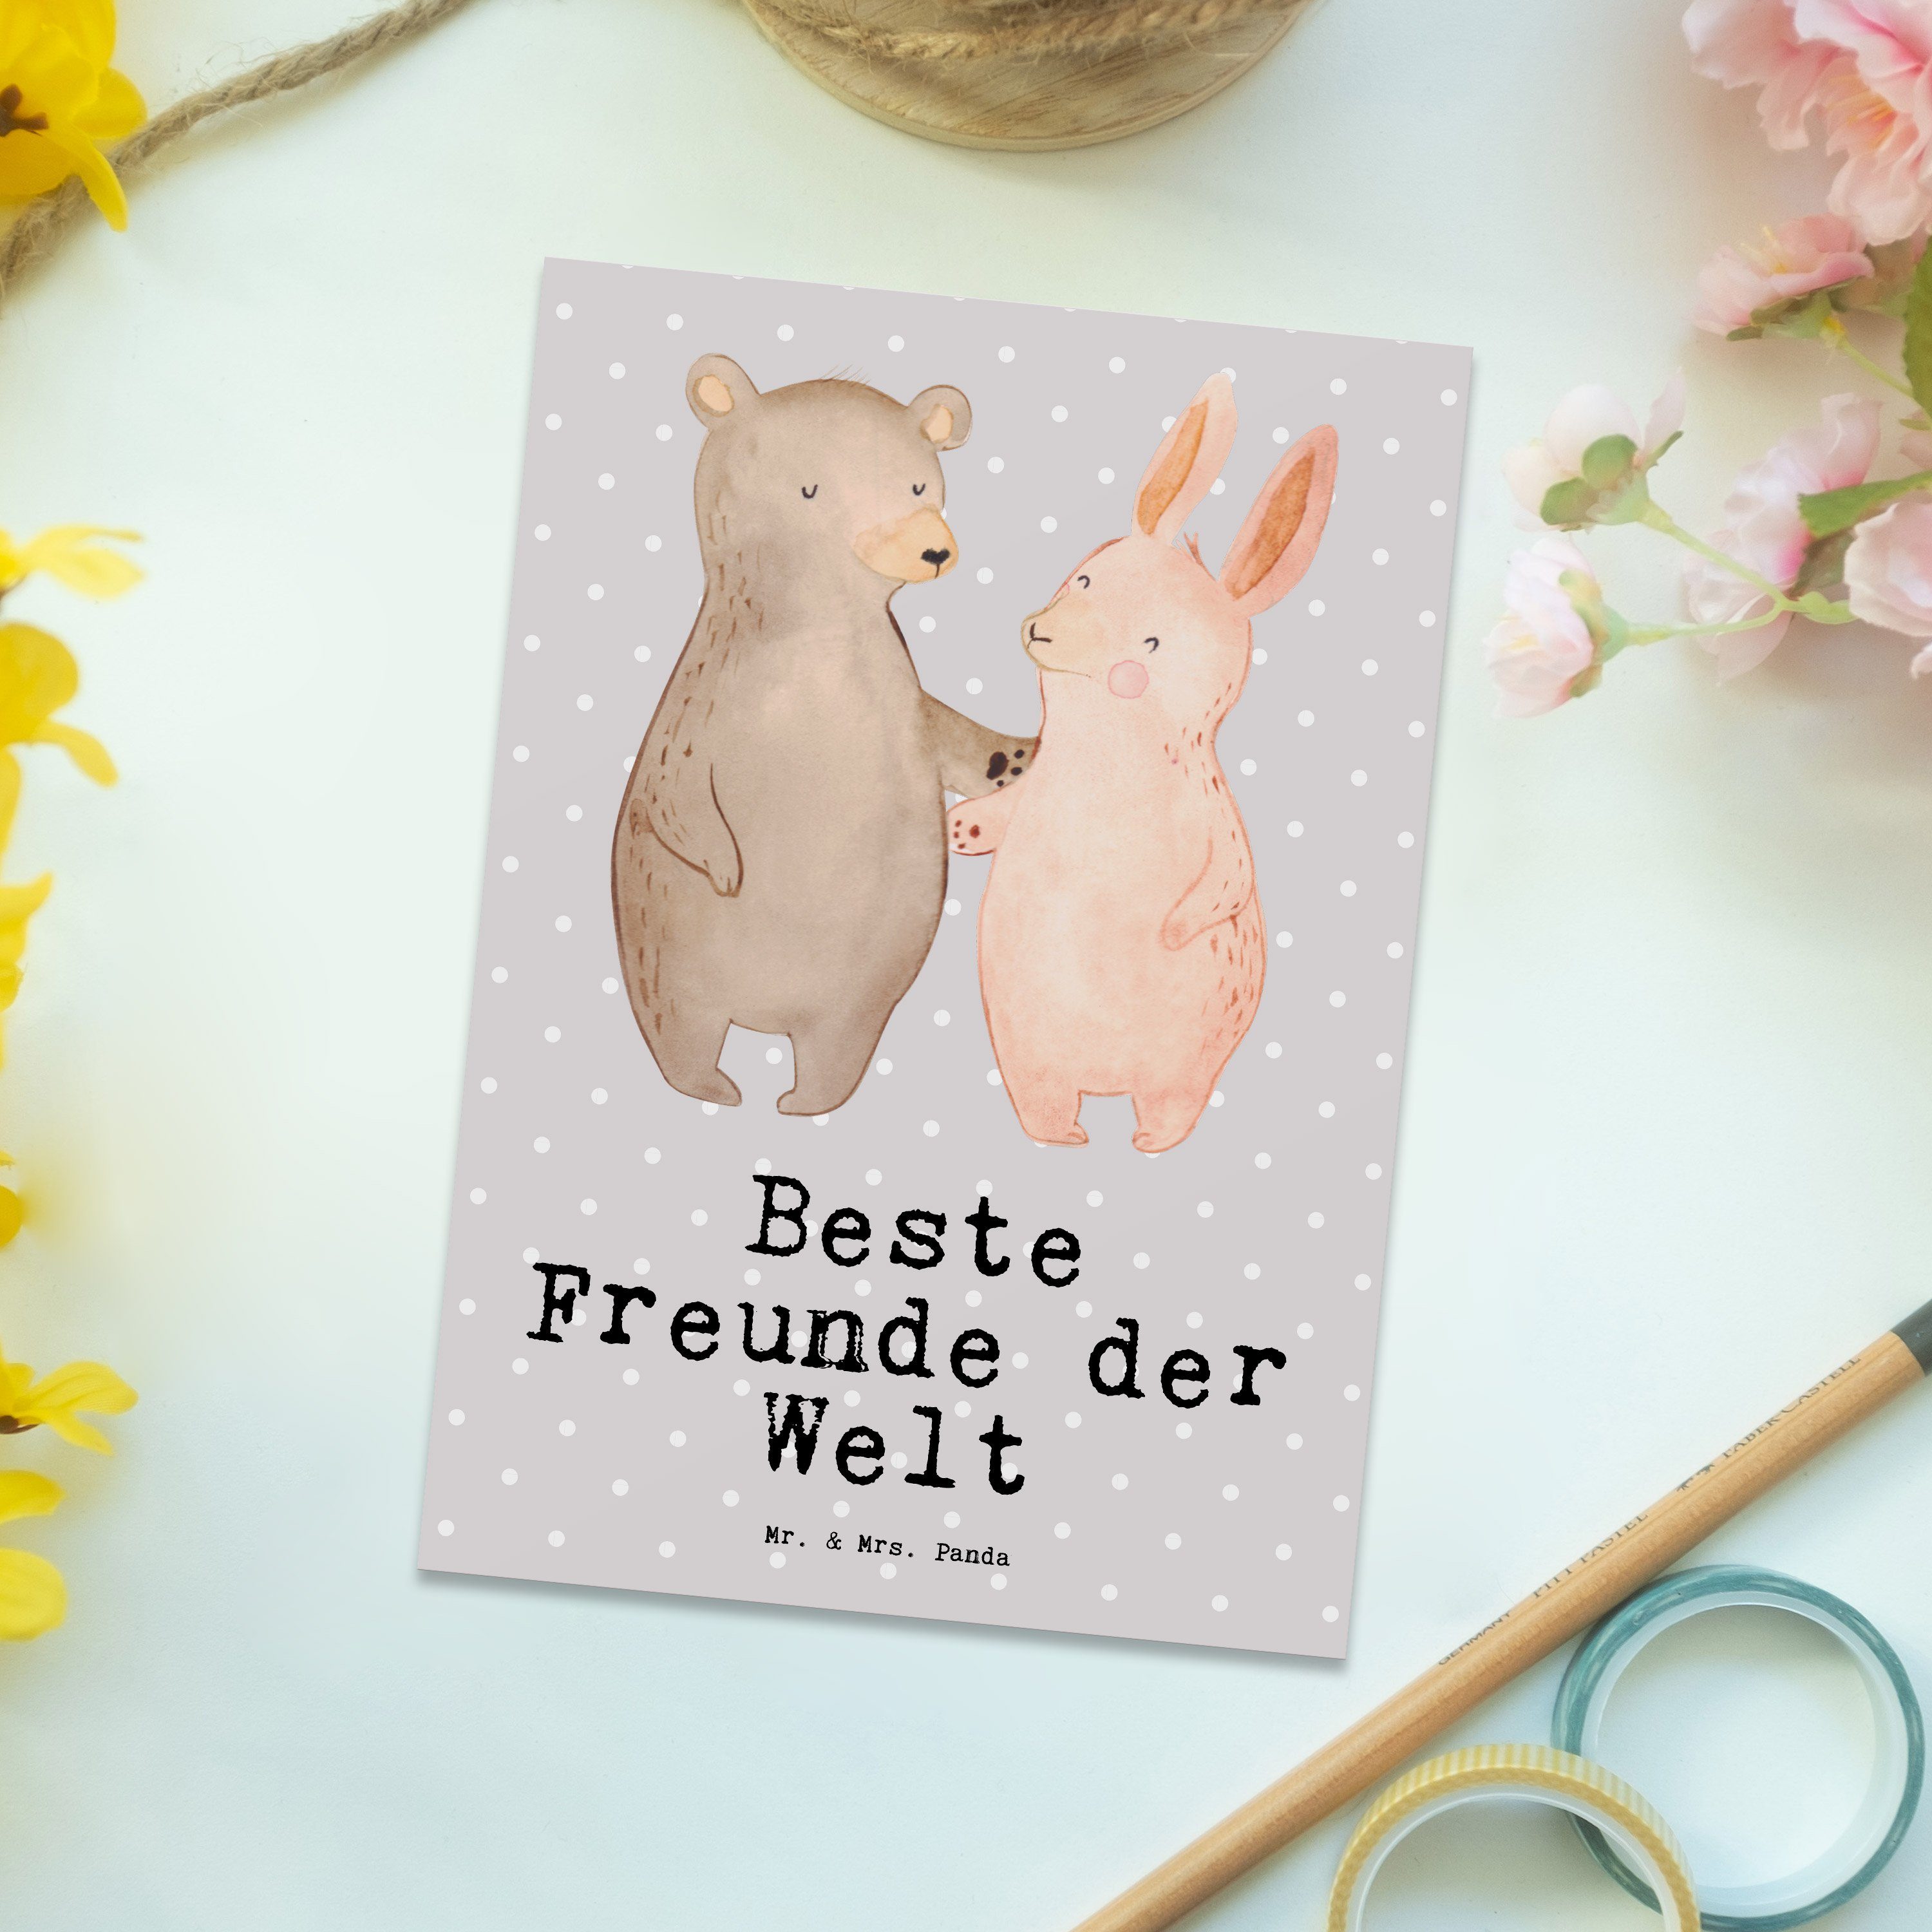 Pastell Geschenk, Hase - friends Mr. Beste der Welt Freunde Mrs. Panda best Grau - & Postkarte